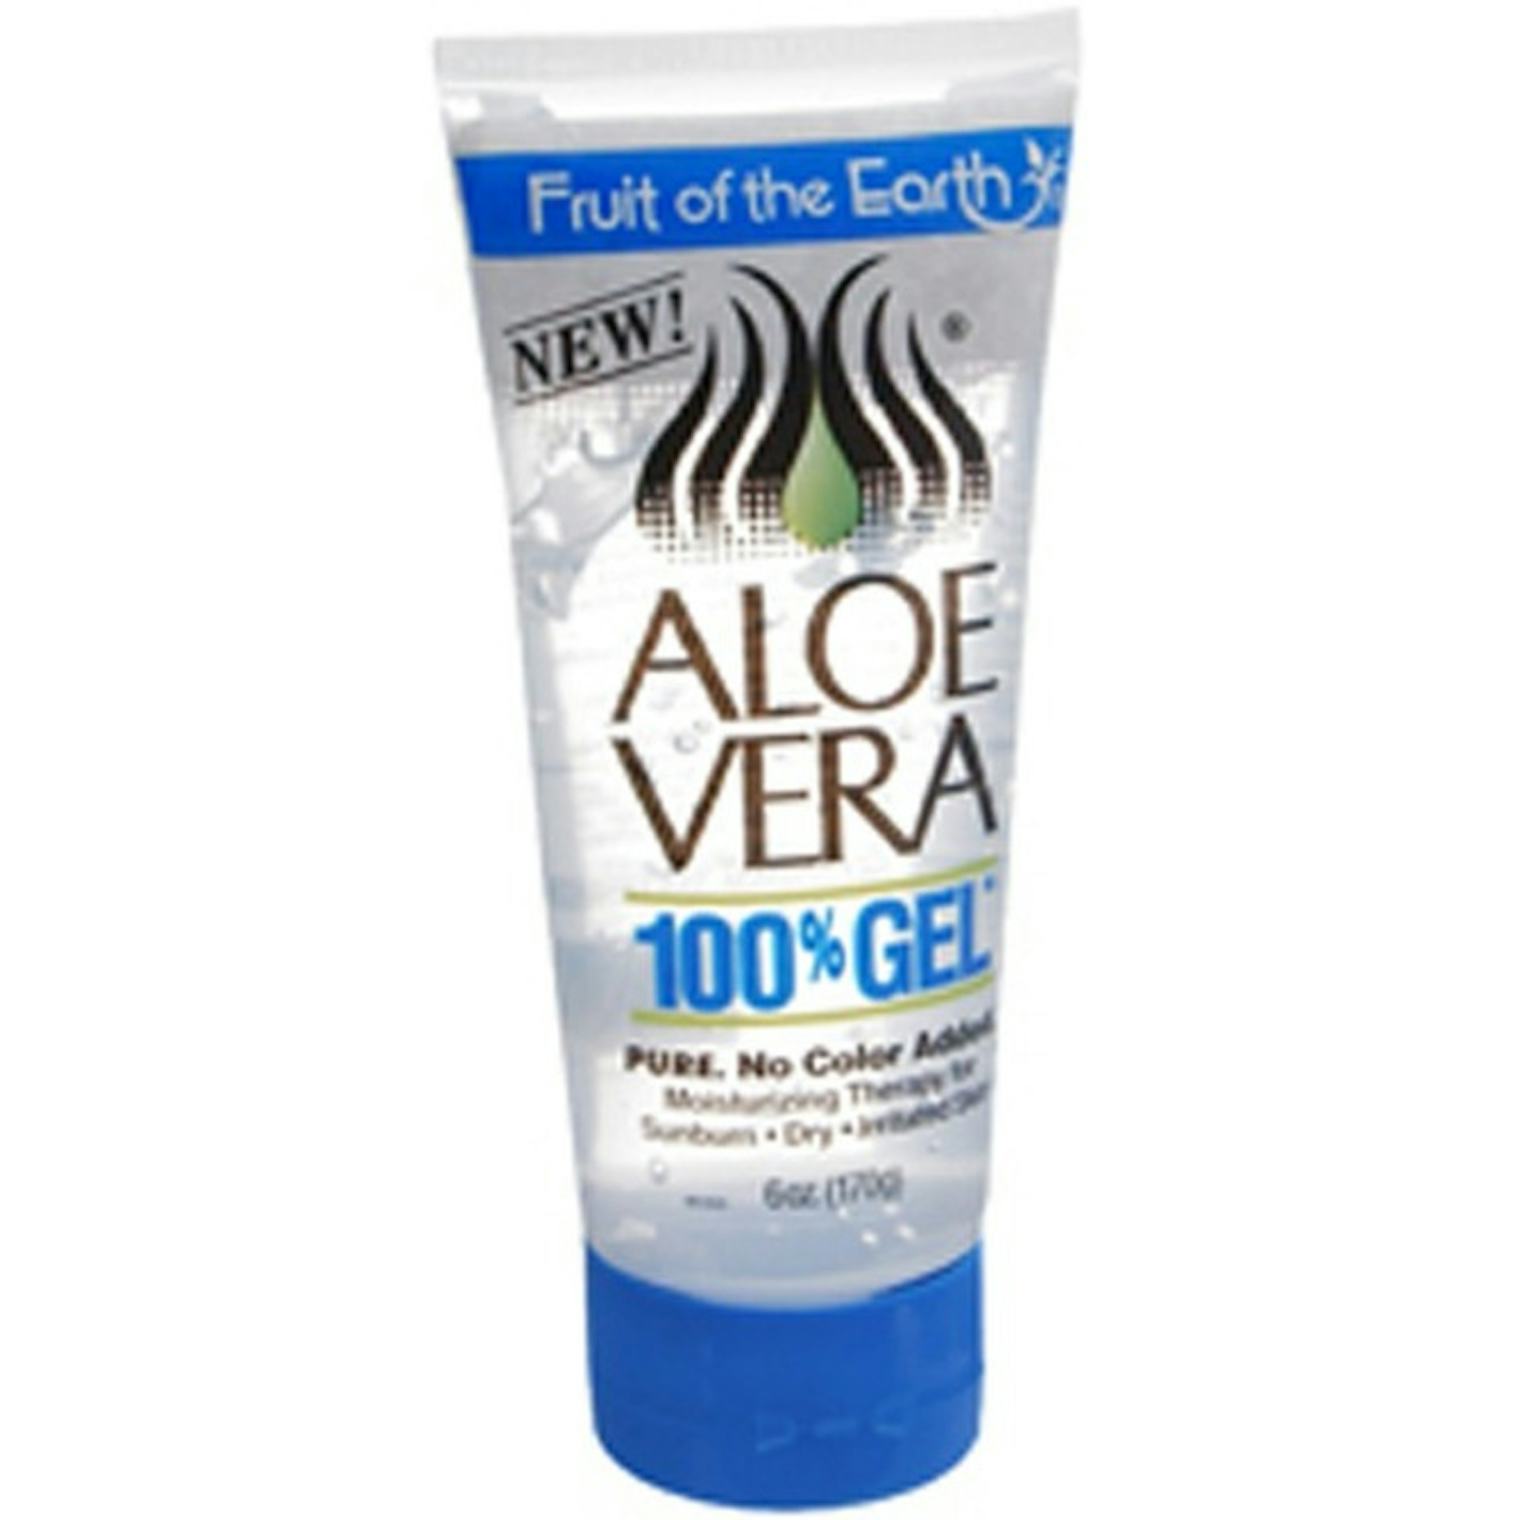 11 Aloe Vera Gel Beauty Hacks You Should Know Beyond How To Soothe A Sunburn 5649